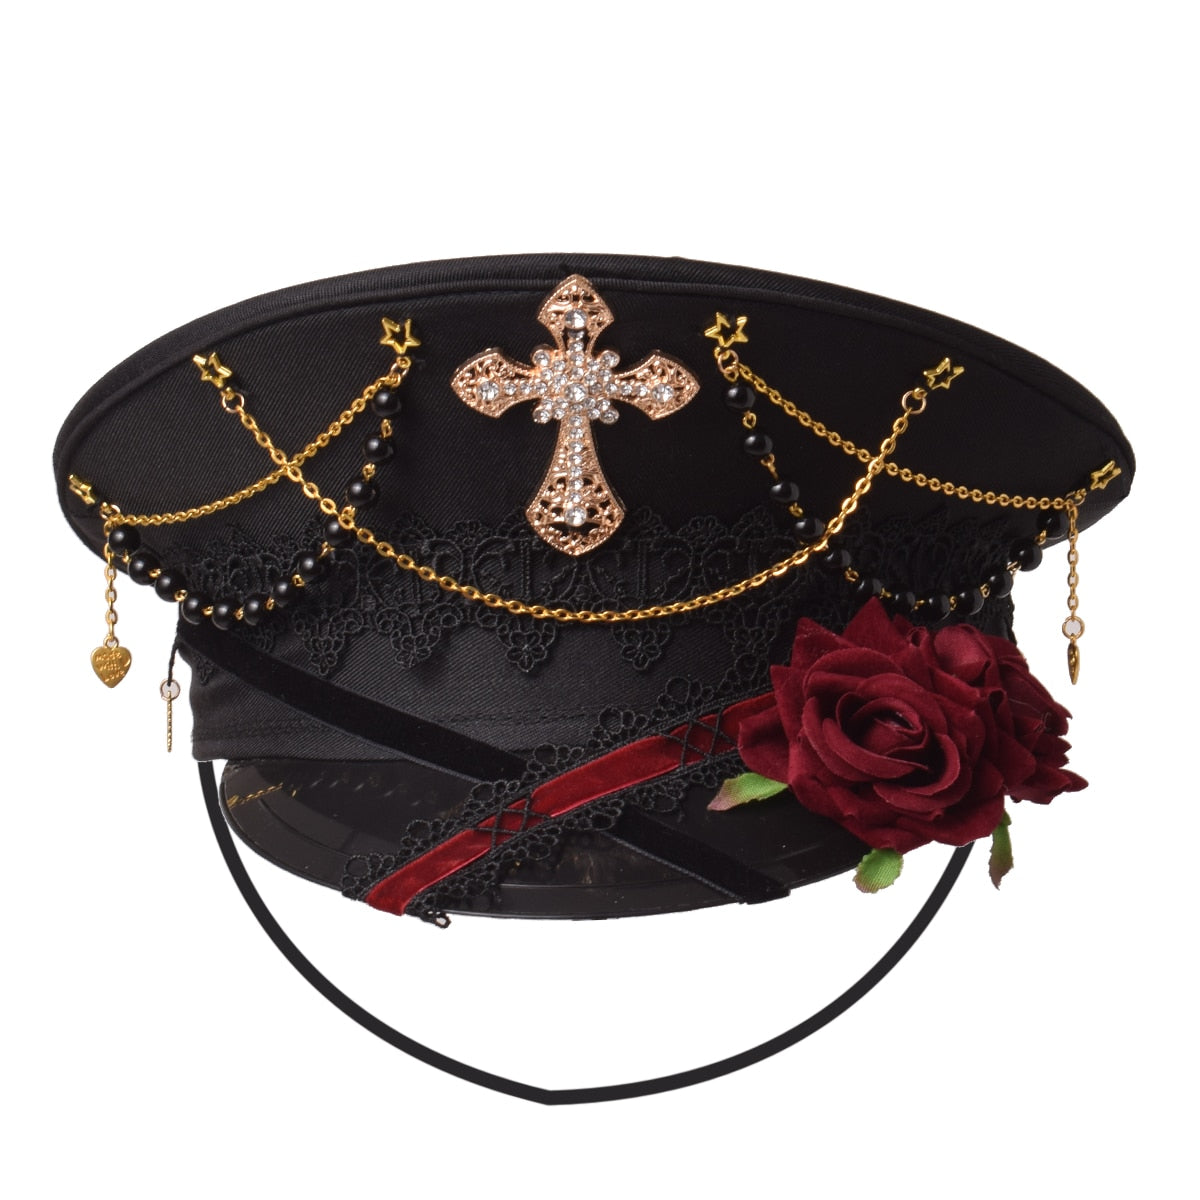 Gothic Punk Cross Lolita Rose Hat MK16980